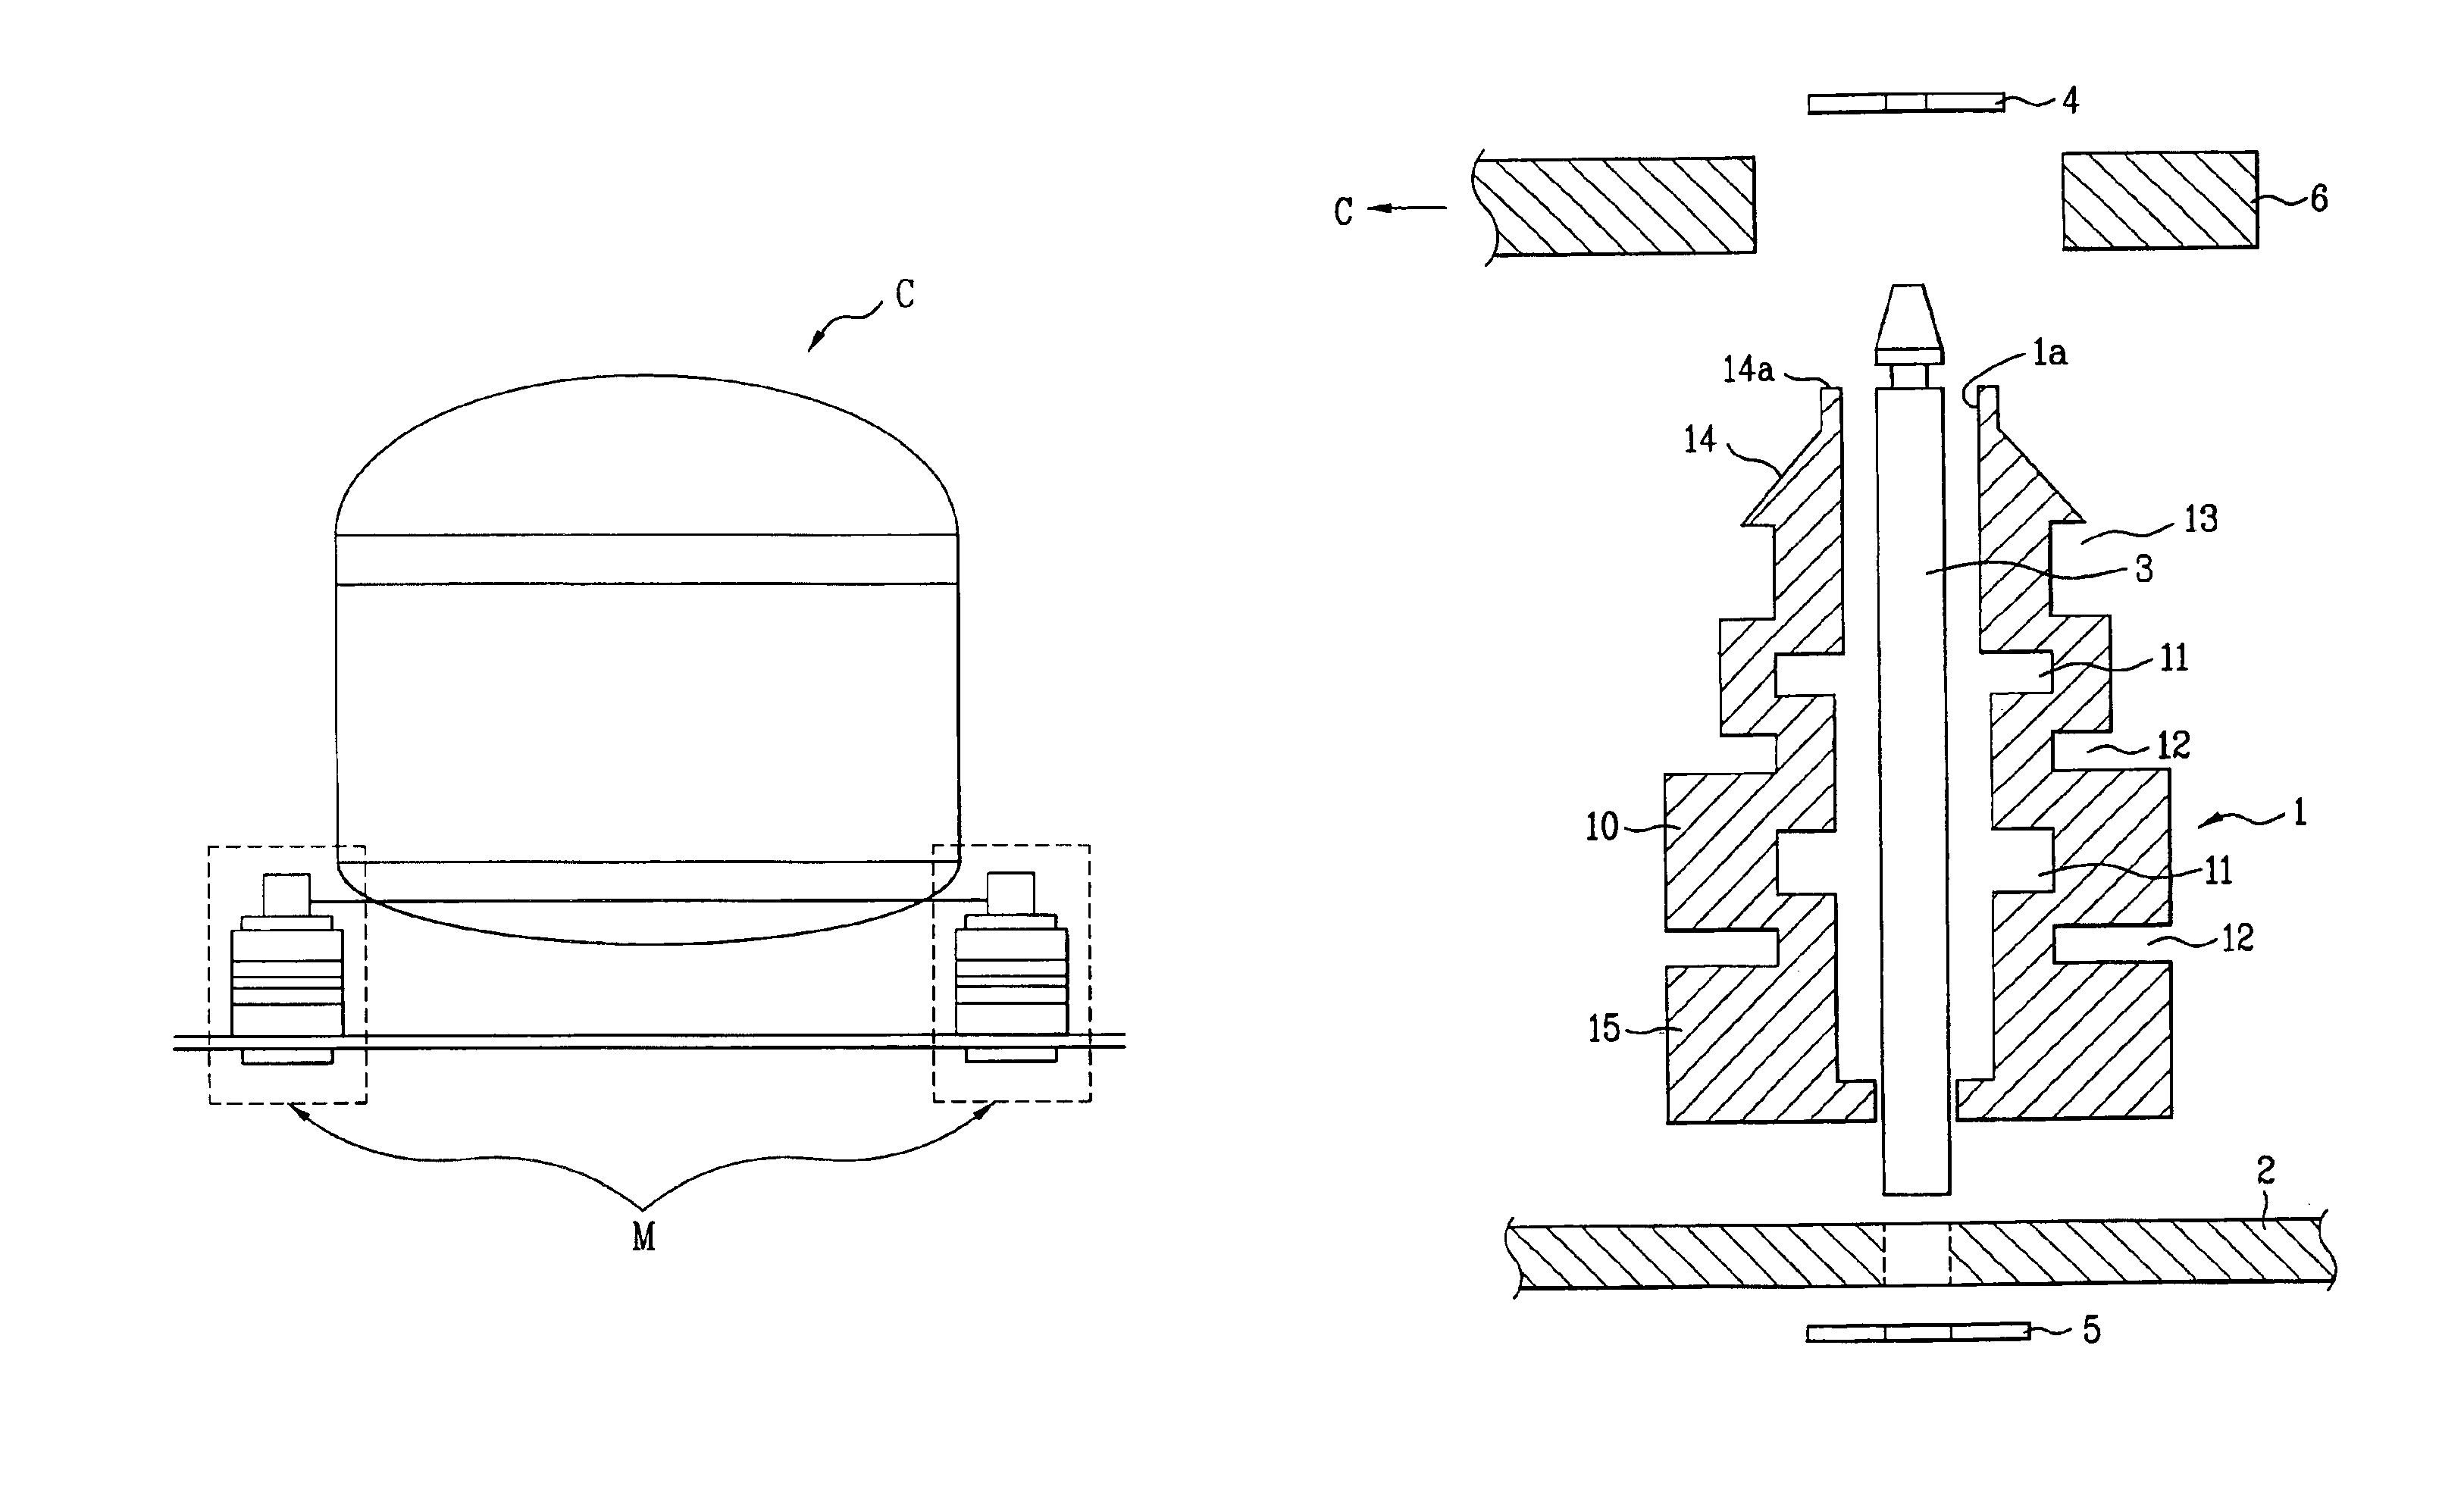 Elastic member and vibration absorption apparatus for a refrigerator compressor